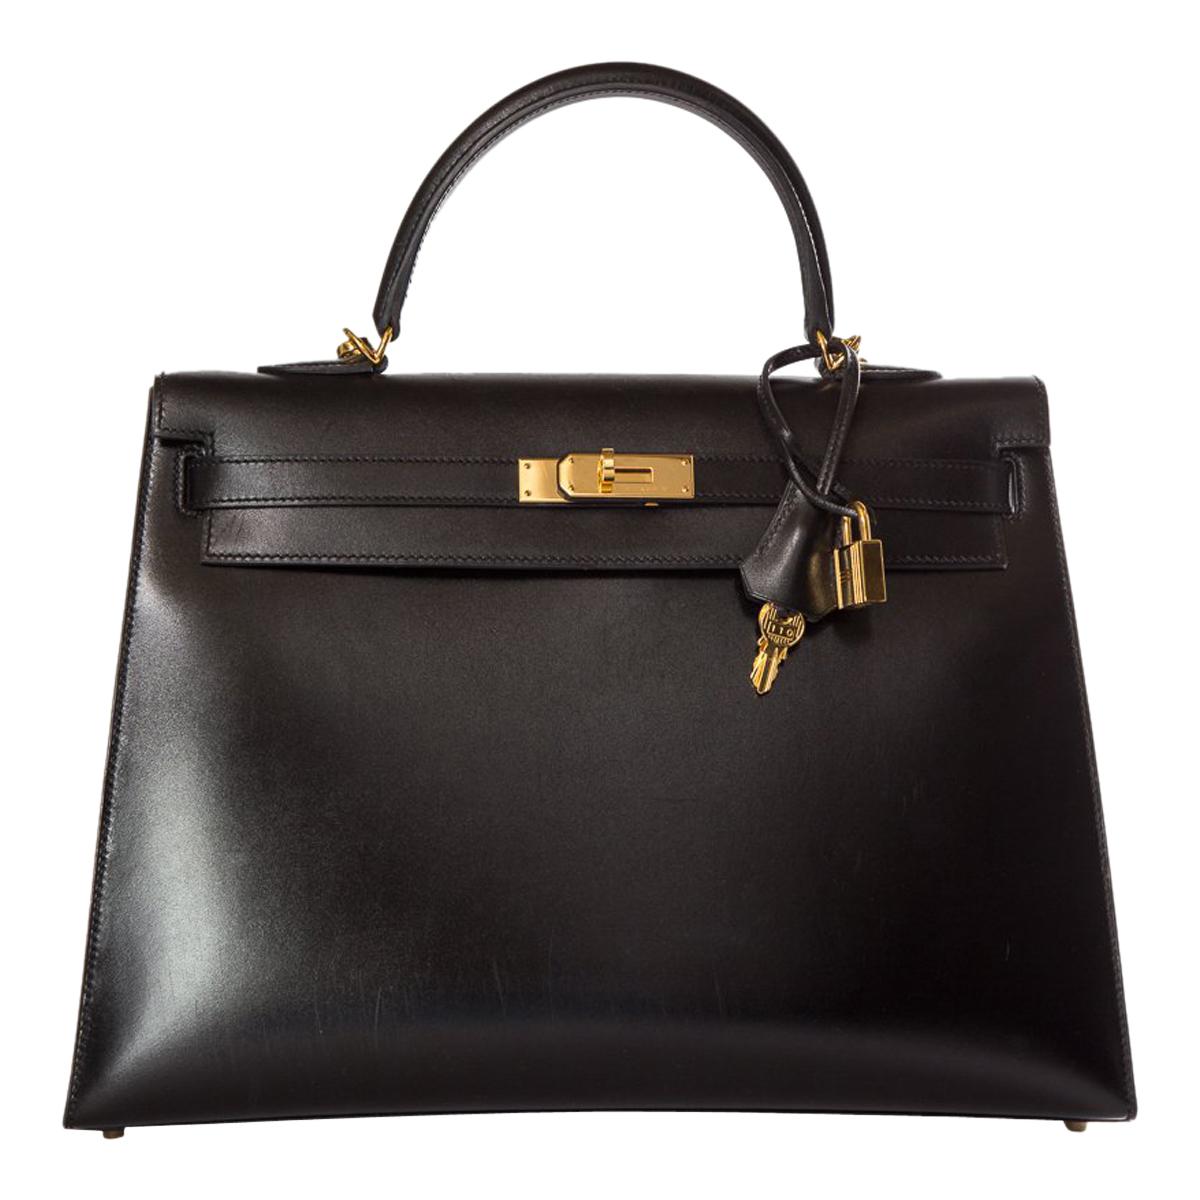 HERMÈS  Black Kelly 35cm Sellier Swift Leather Handle Bag $15, 995.95